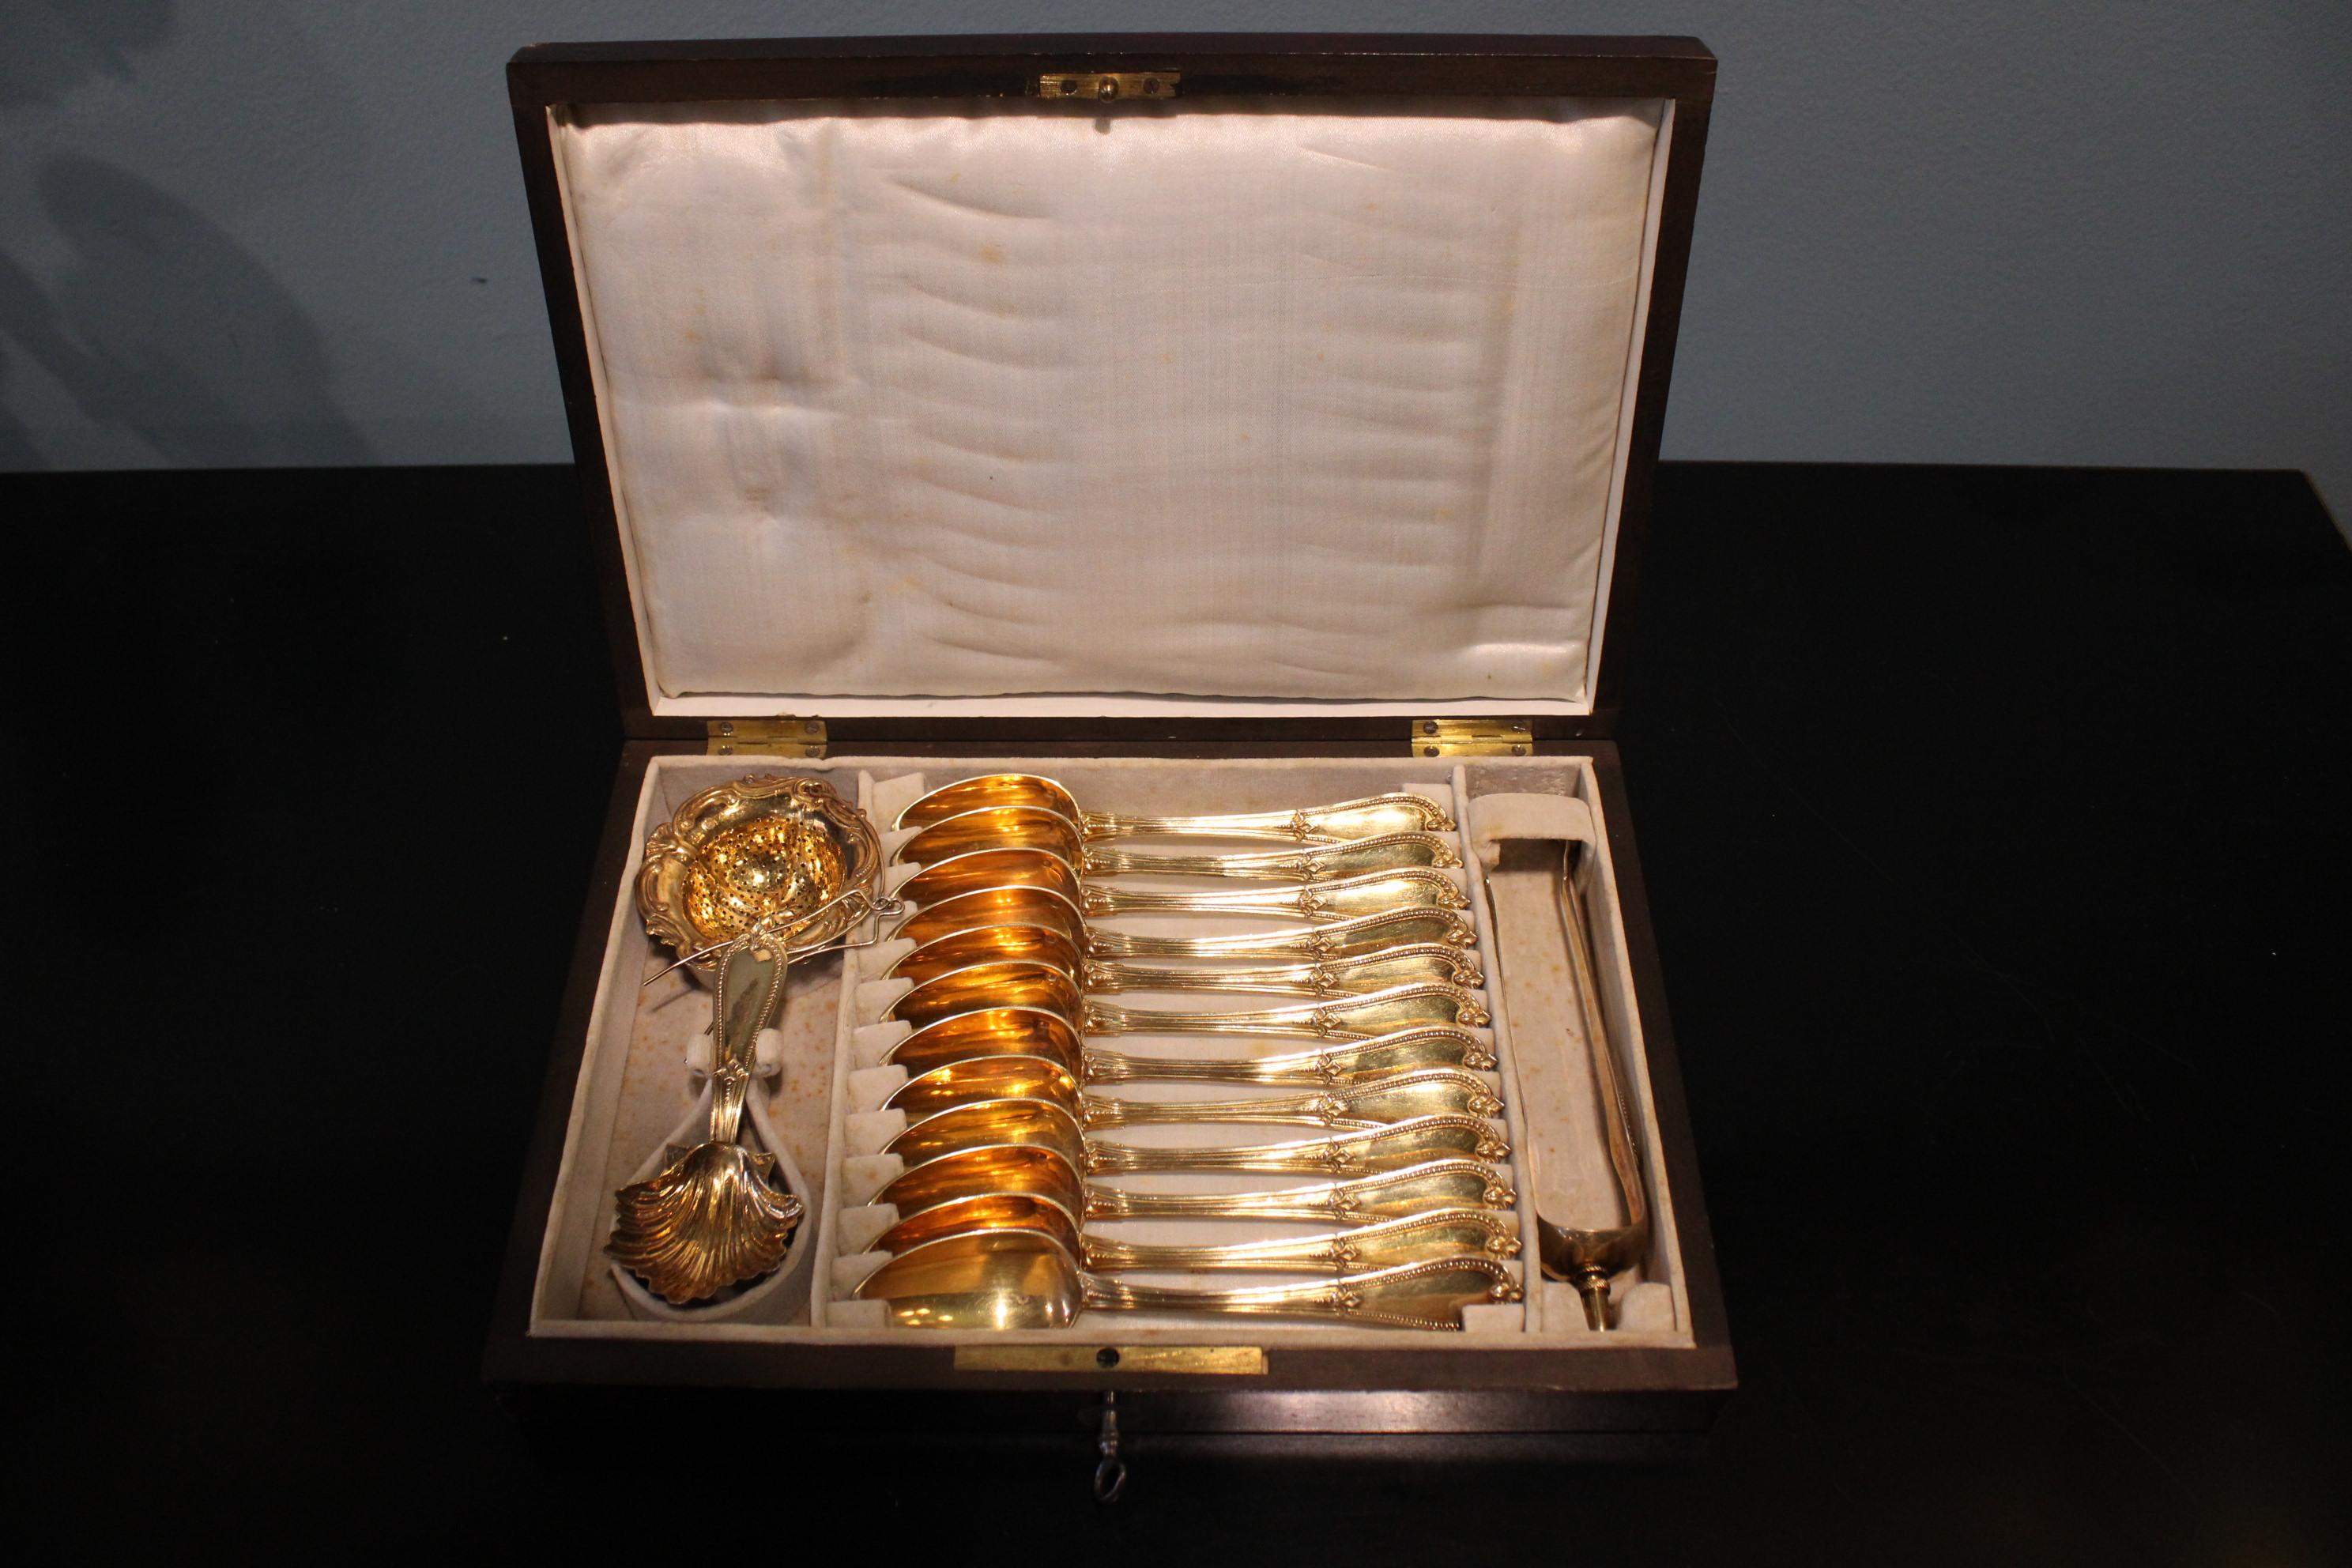 Box of old silver-gilt cutlery.
Hallmark Minerva. 

Box dimensions : 27 x 19 x 4.5 cm
Dimensions of a snoop : 15 x 3 x 1 cm.